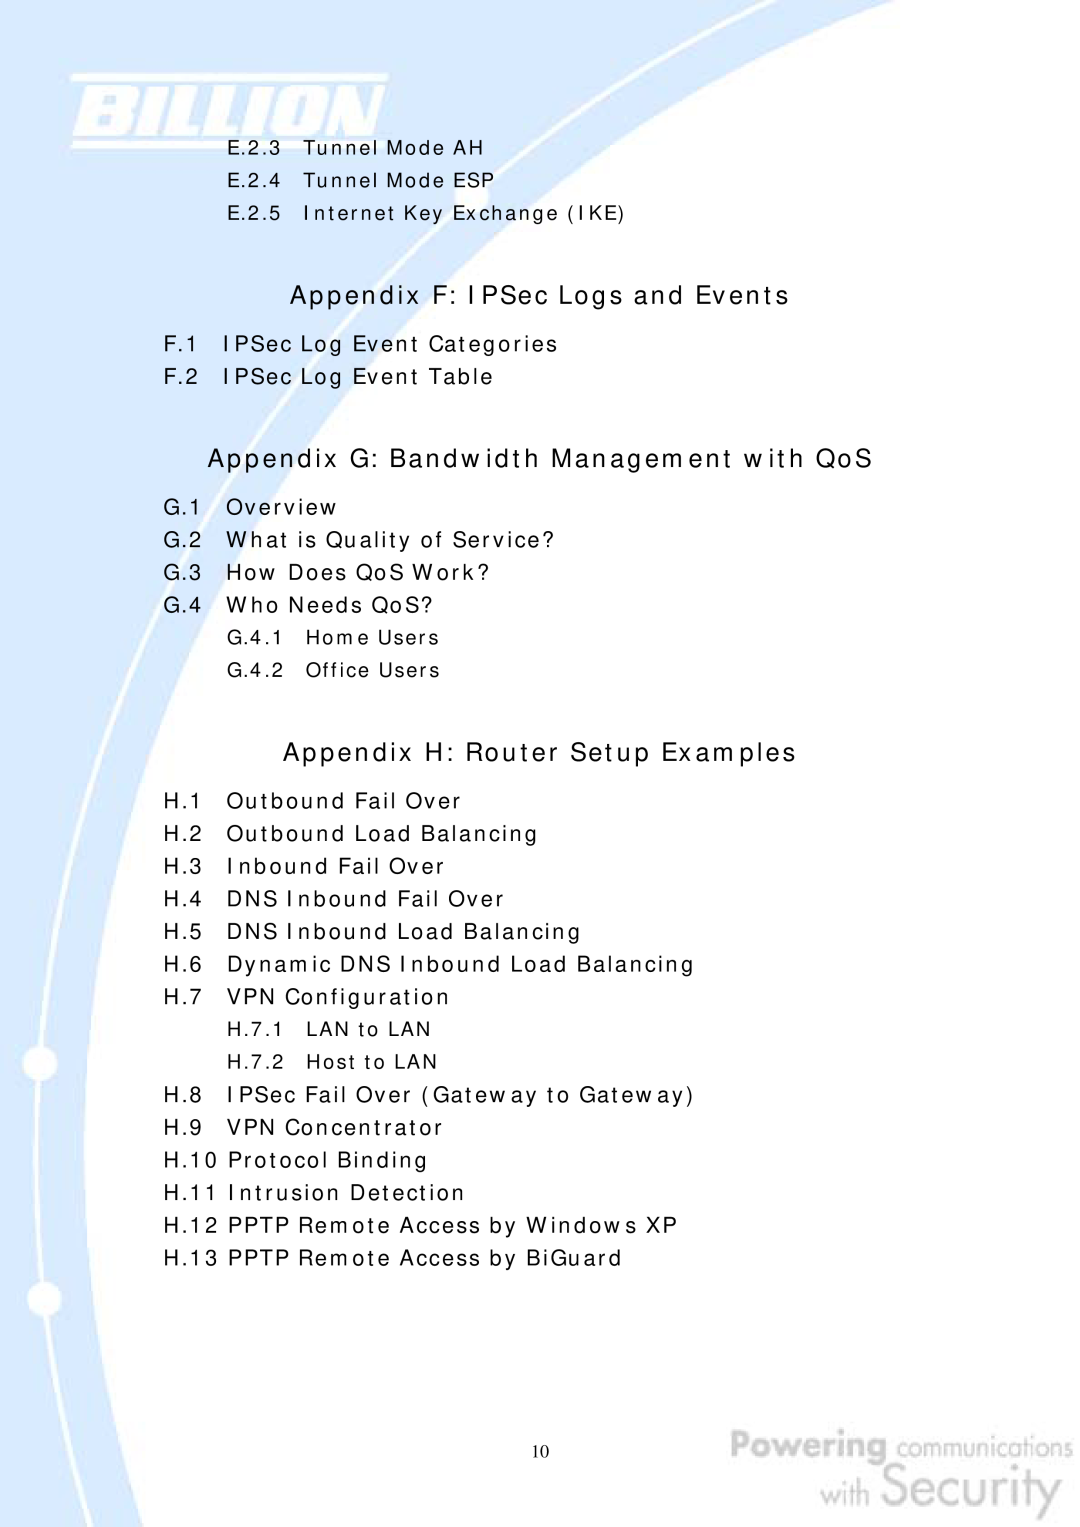 Billion Electric Company 30 Appendix F IPSec Logs and Events, Appendix G Bandwidth Management with QoS, Overview 